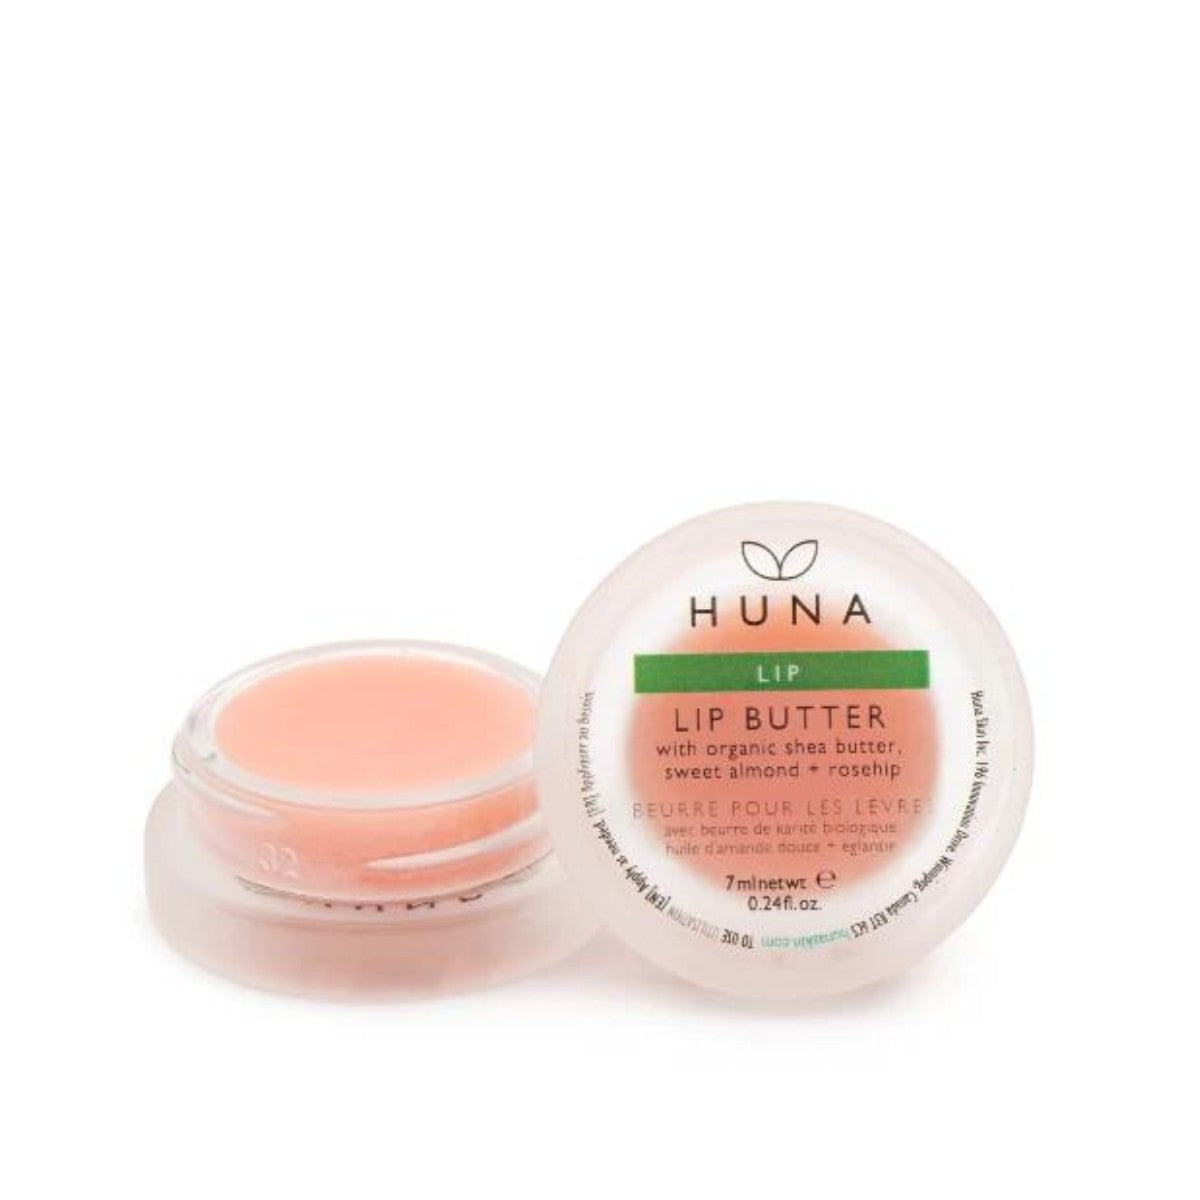 Huna Moisturizing Lip Butter - Pink Petal